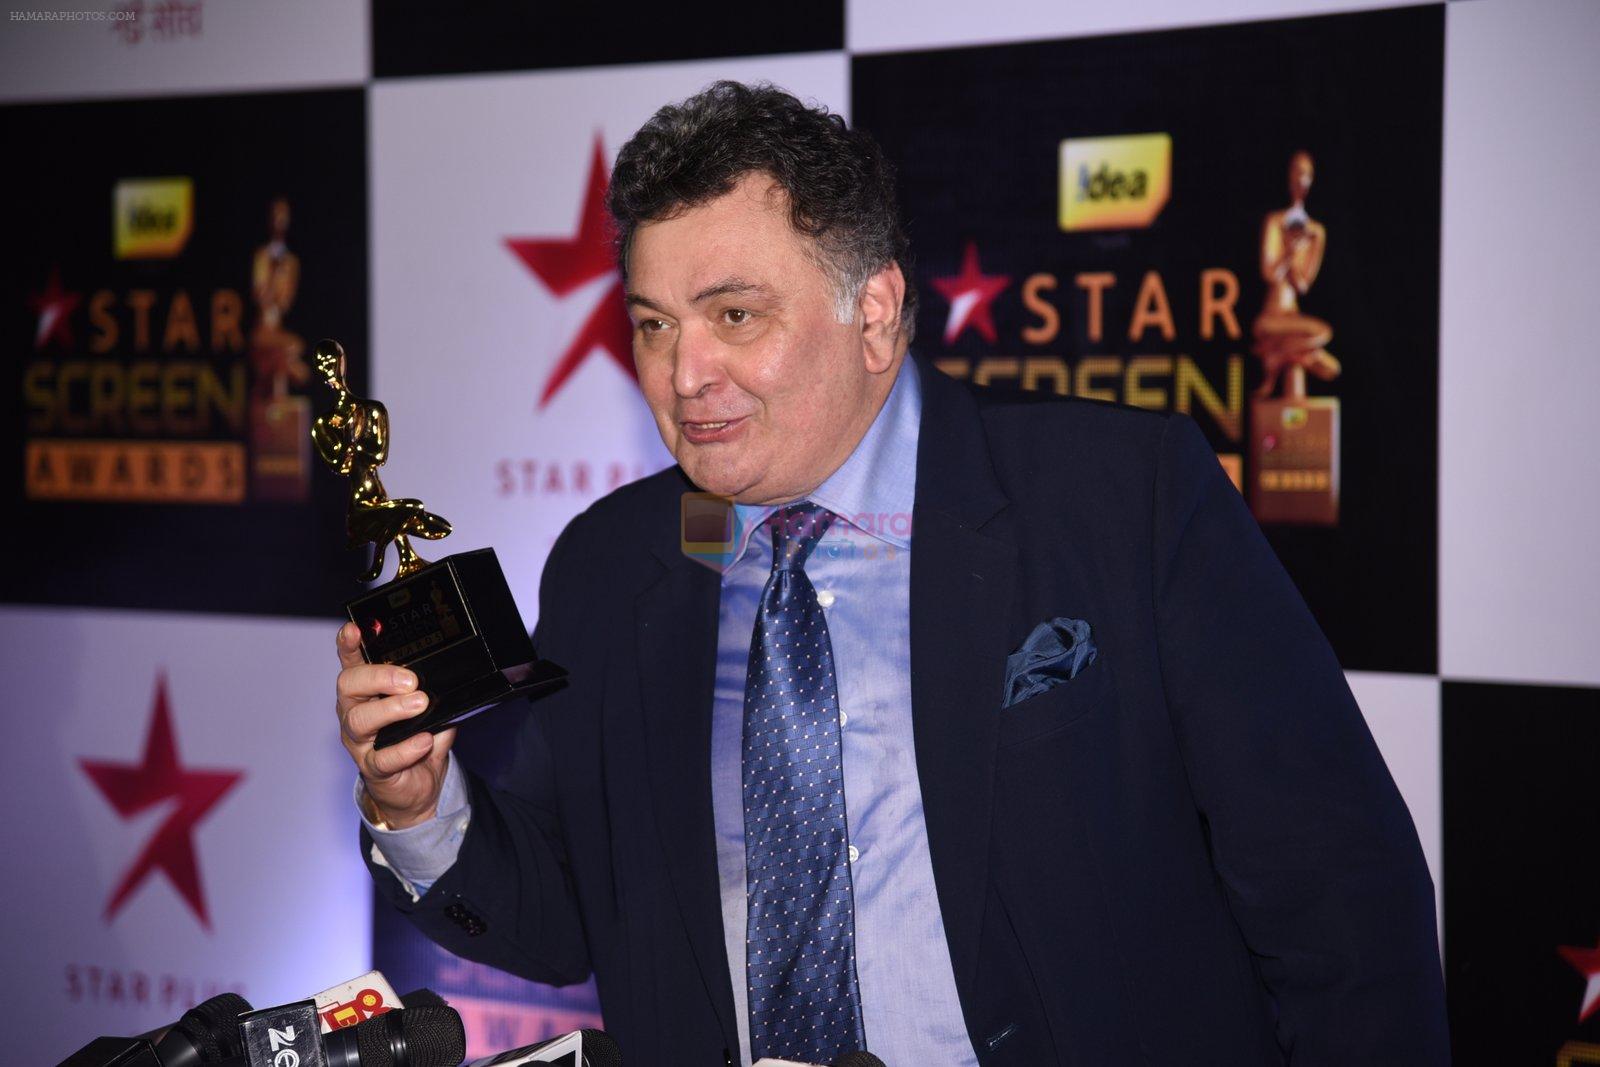 Rishi Kapoor at 22nd Star Screen Awards 2016 on 4th Dec 2016